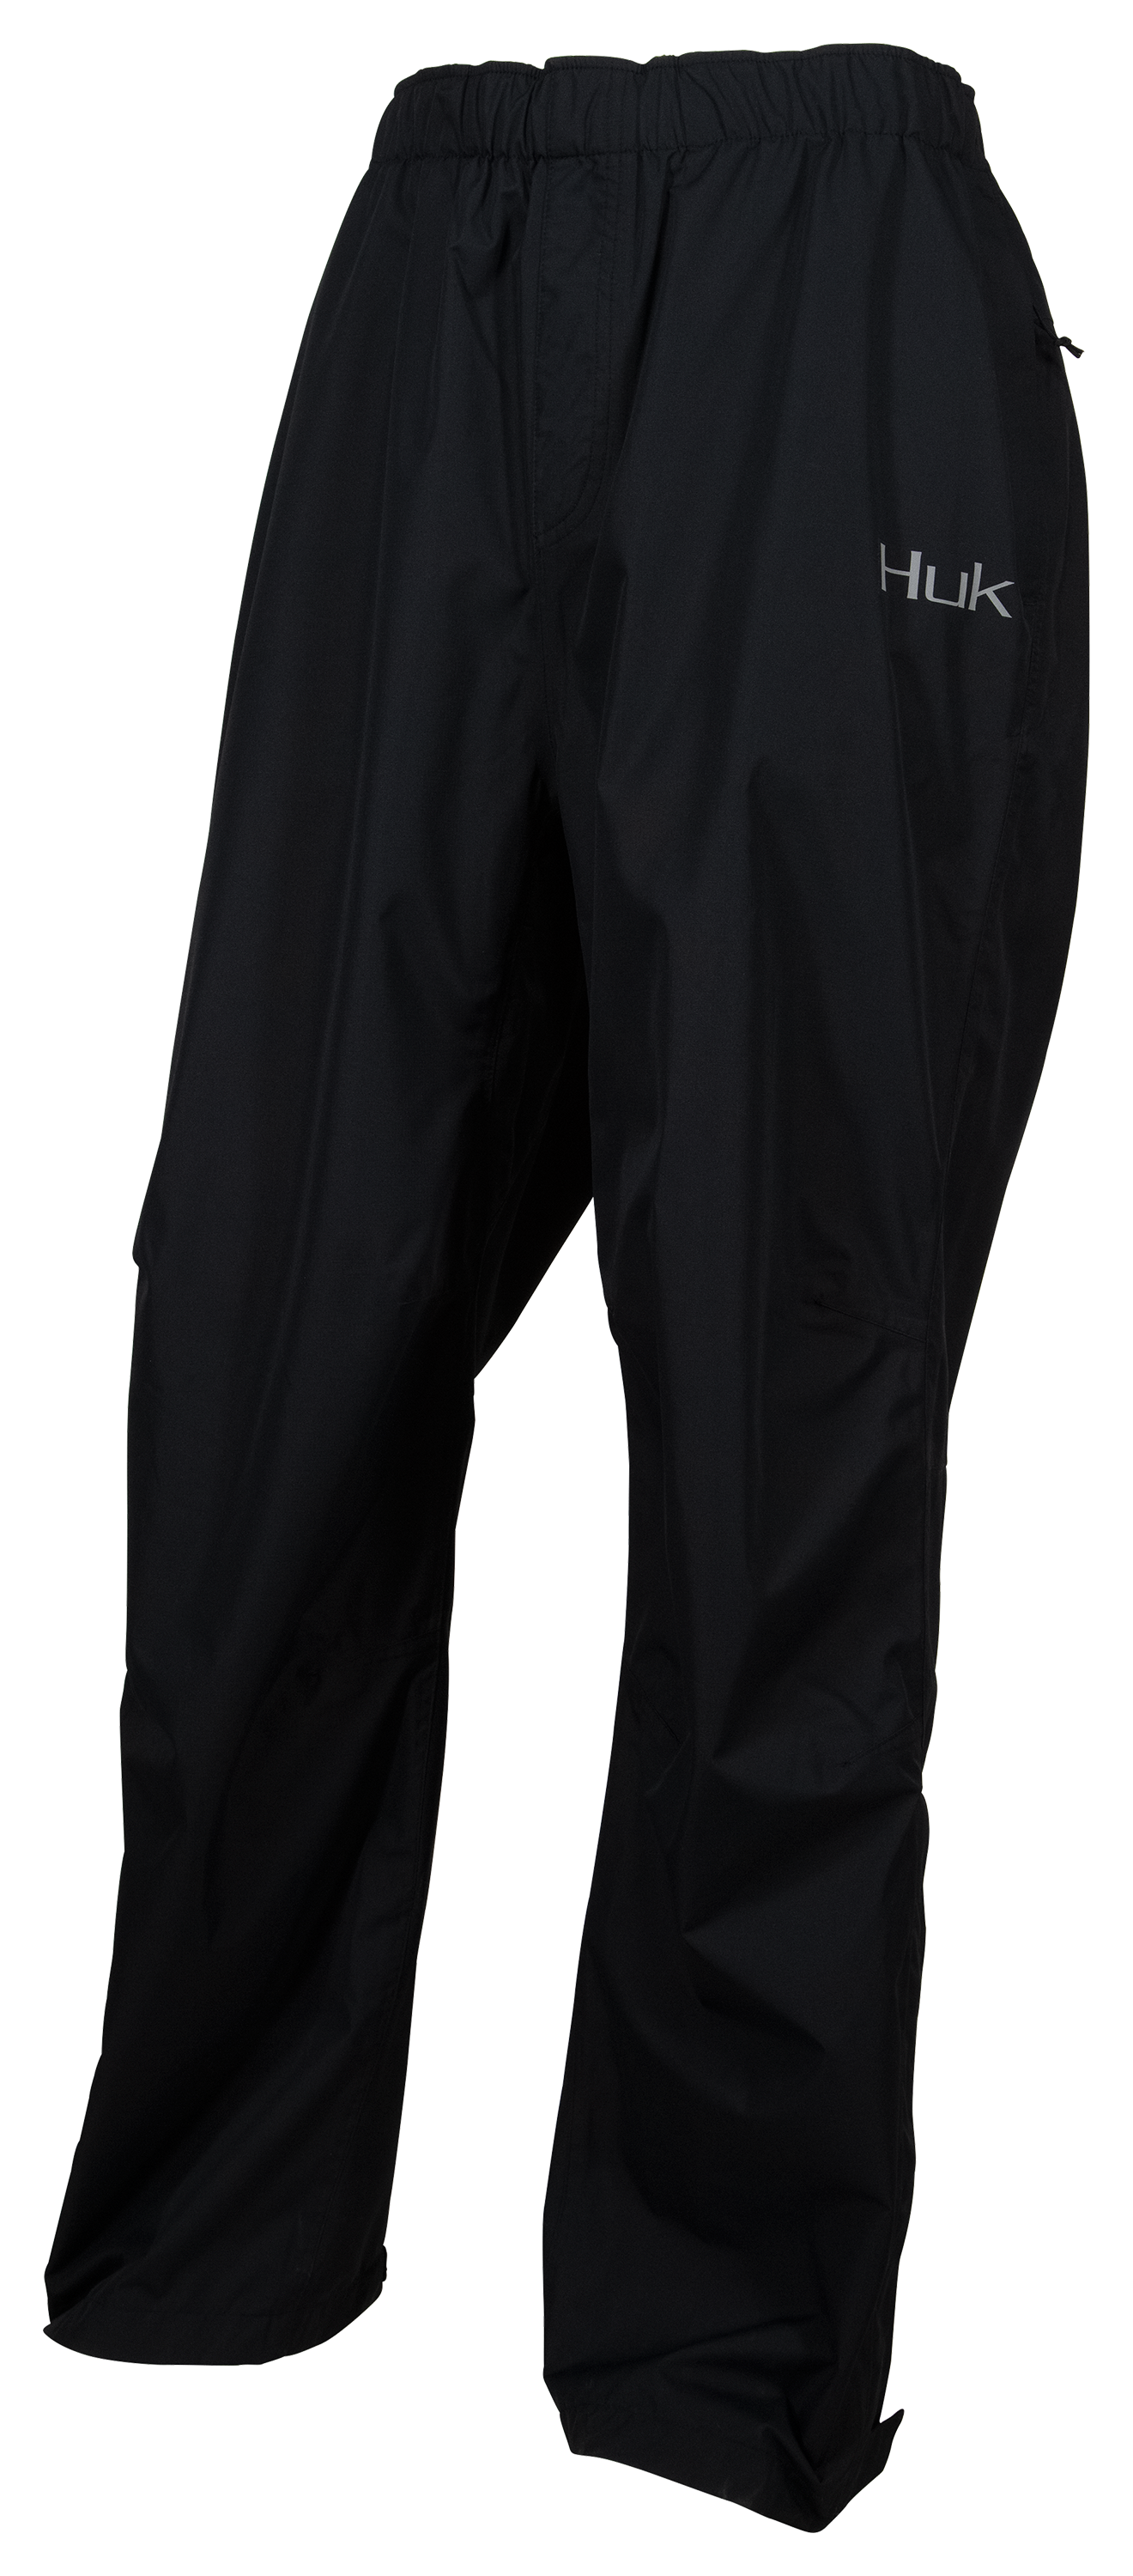 HUK Men's Gunwale Water Proof & Wind Resistant Rain Pant, Black